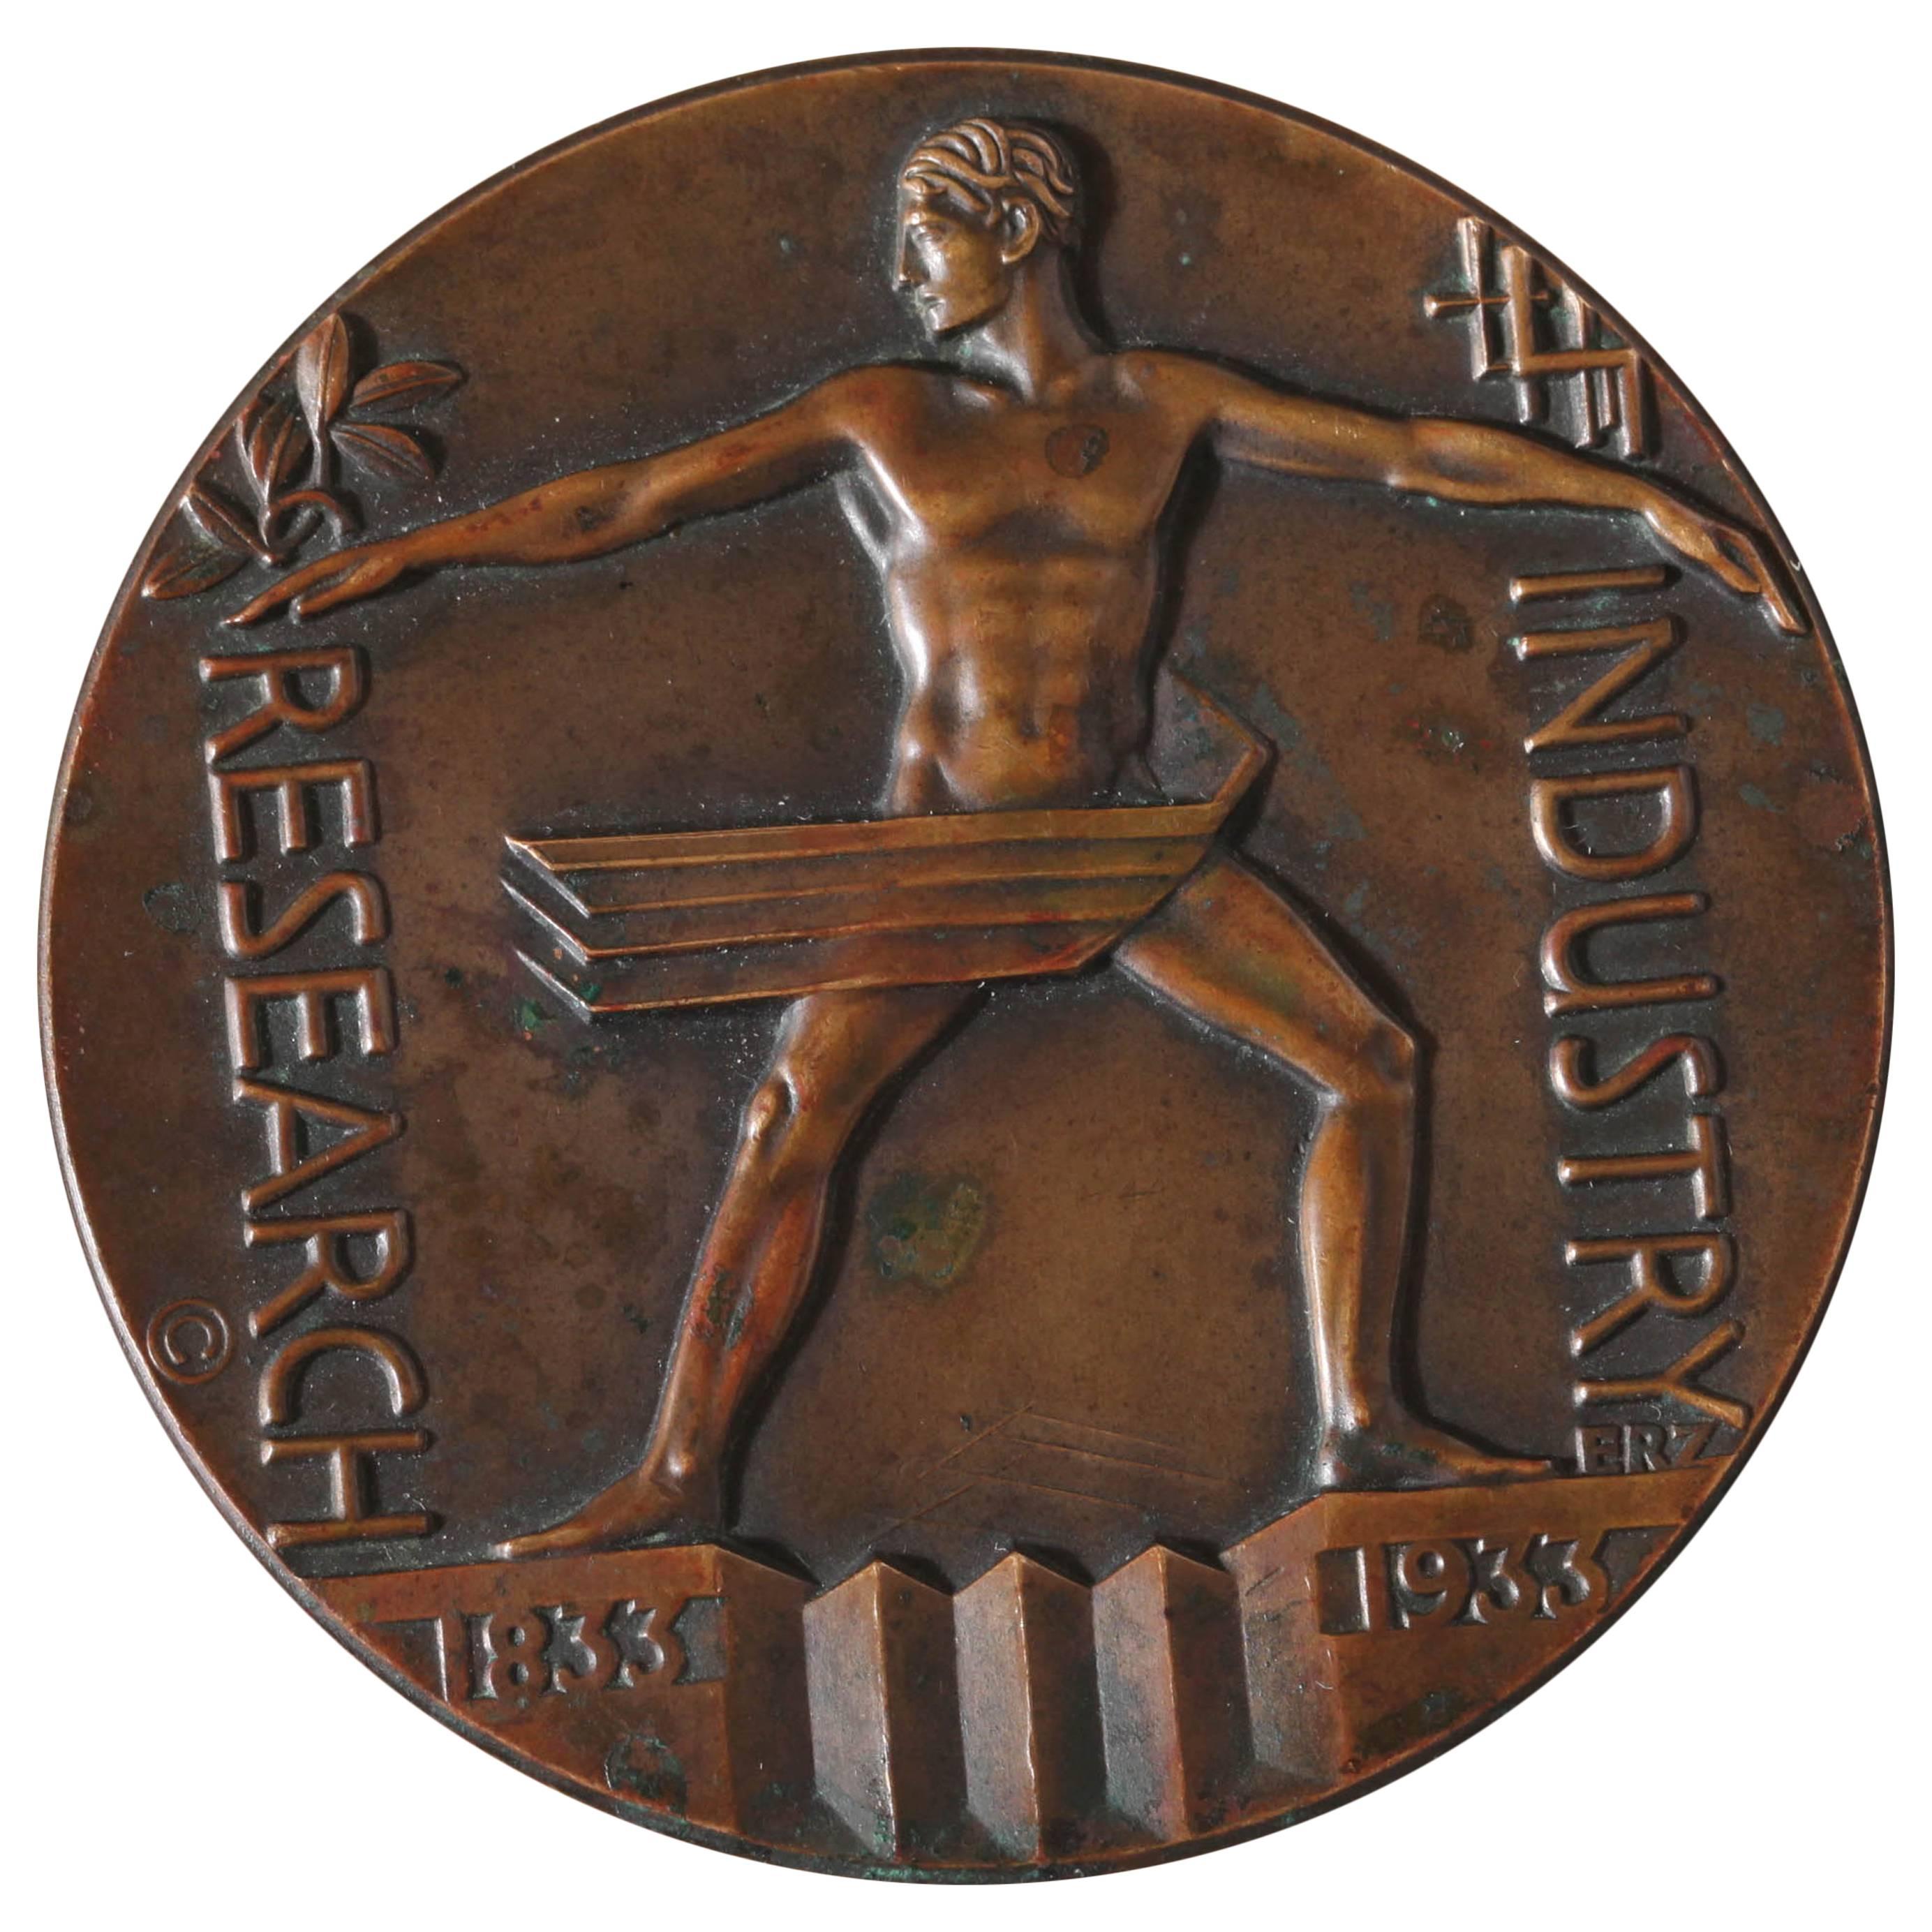 American Art Deco Medal Commemorating Century of Progress International Expo